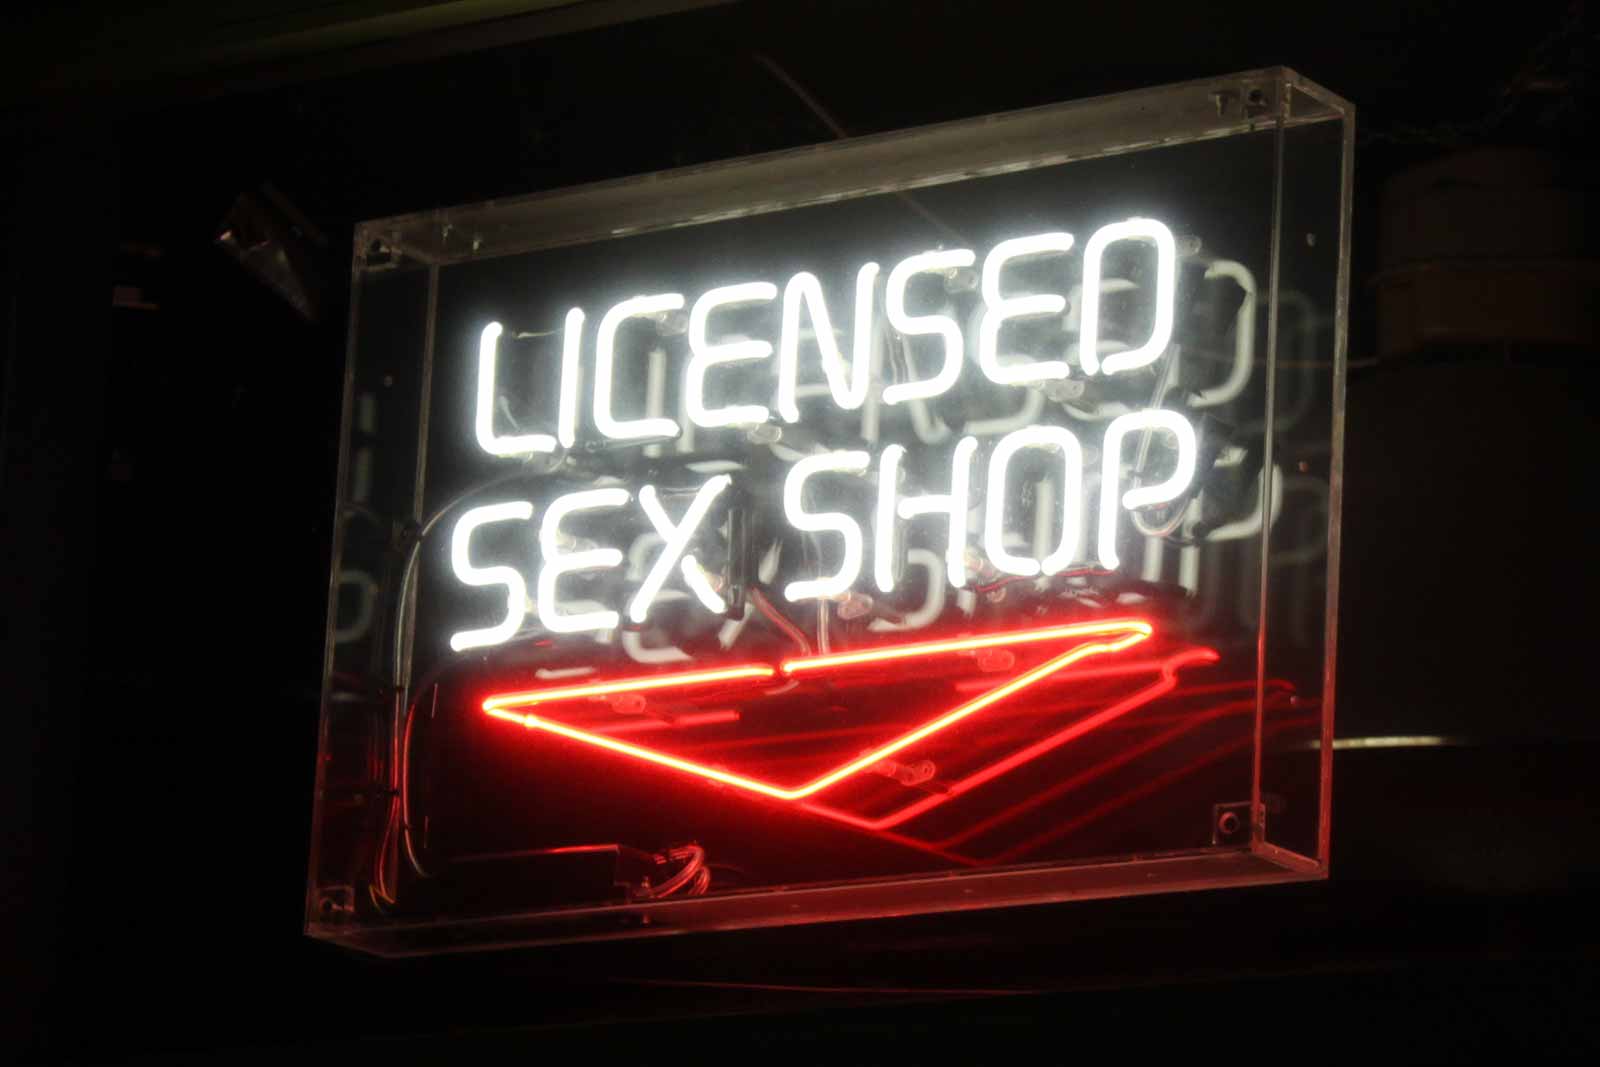 Sex shop cinema